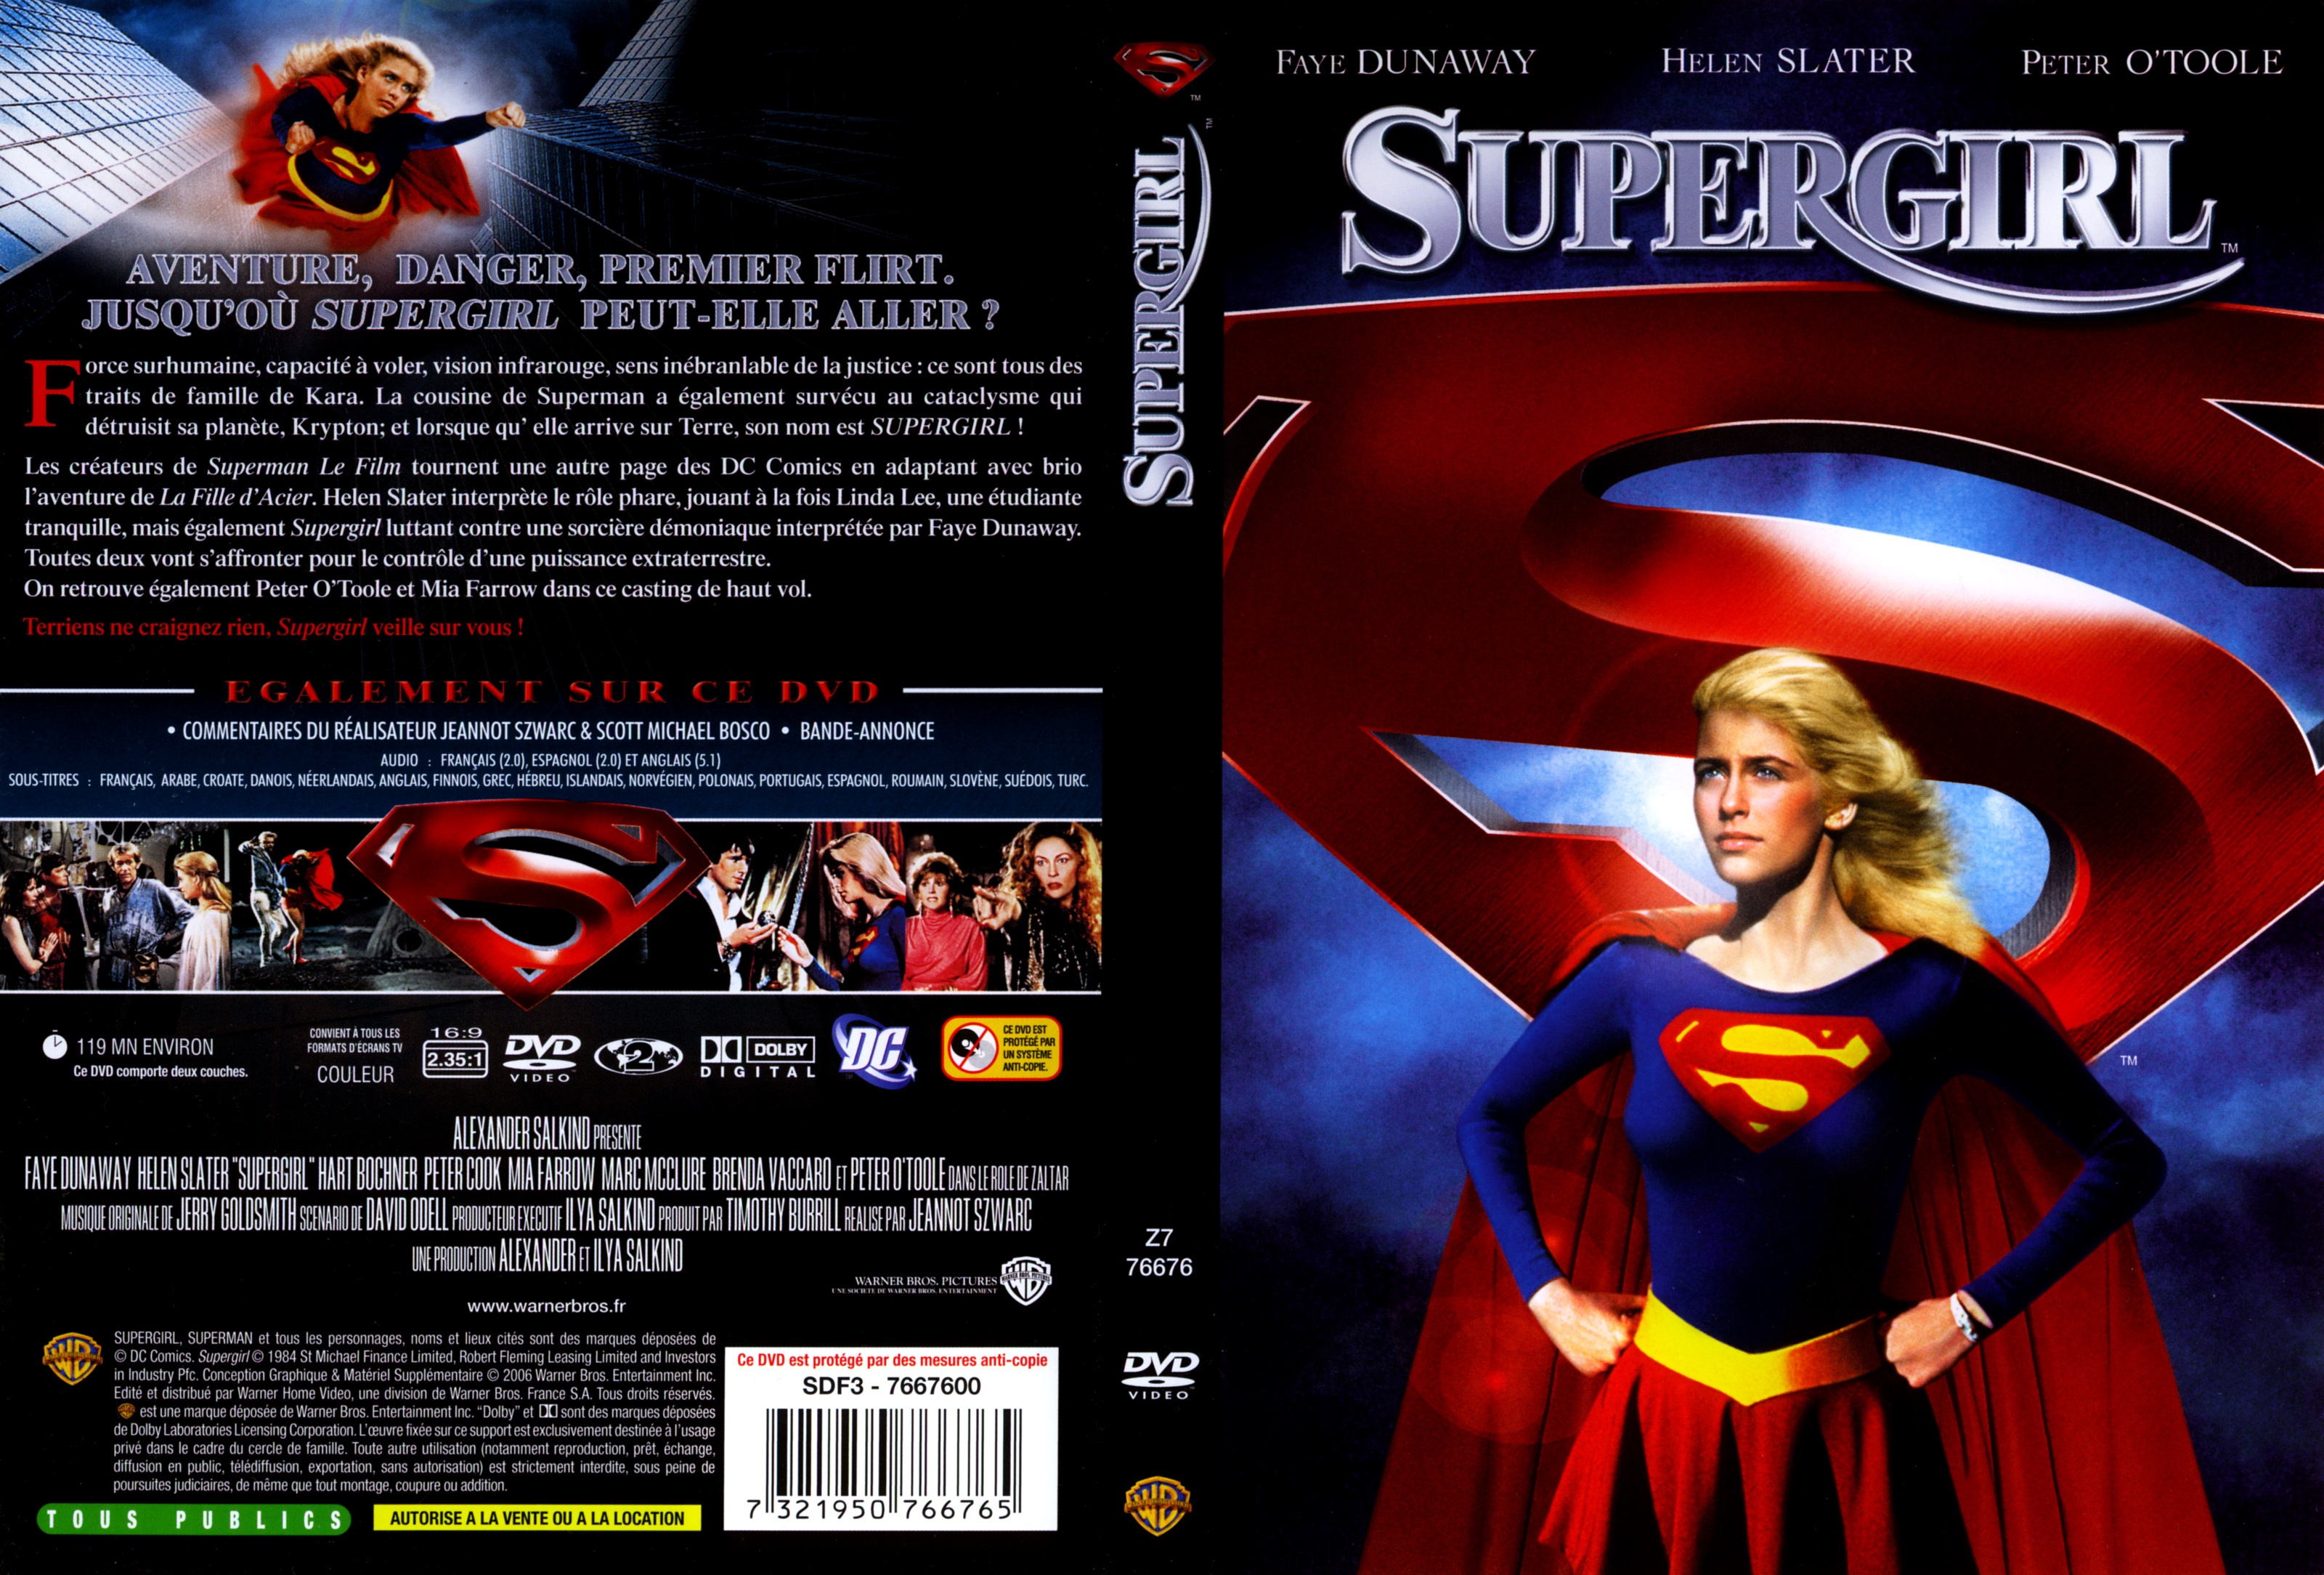 Jaquette DVD Supergirl